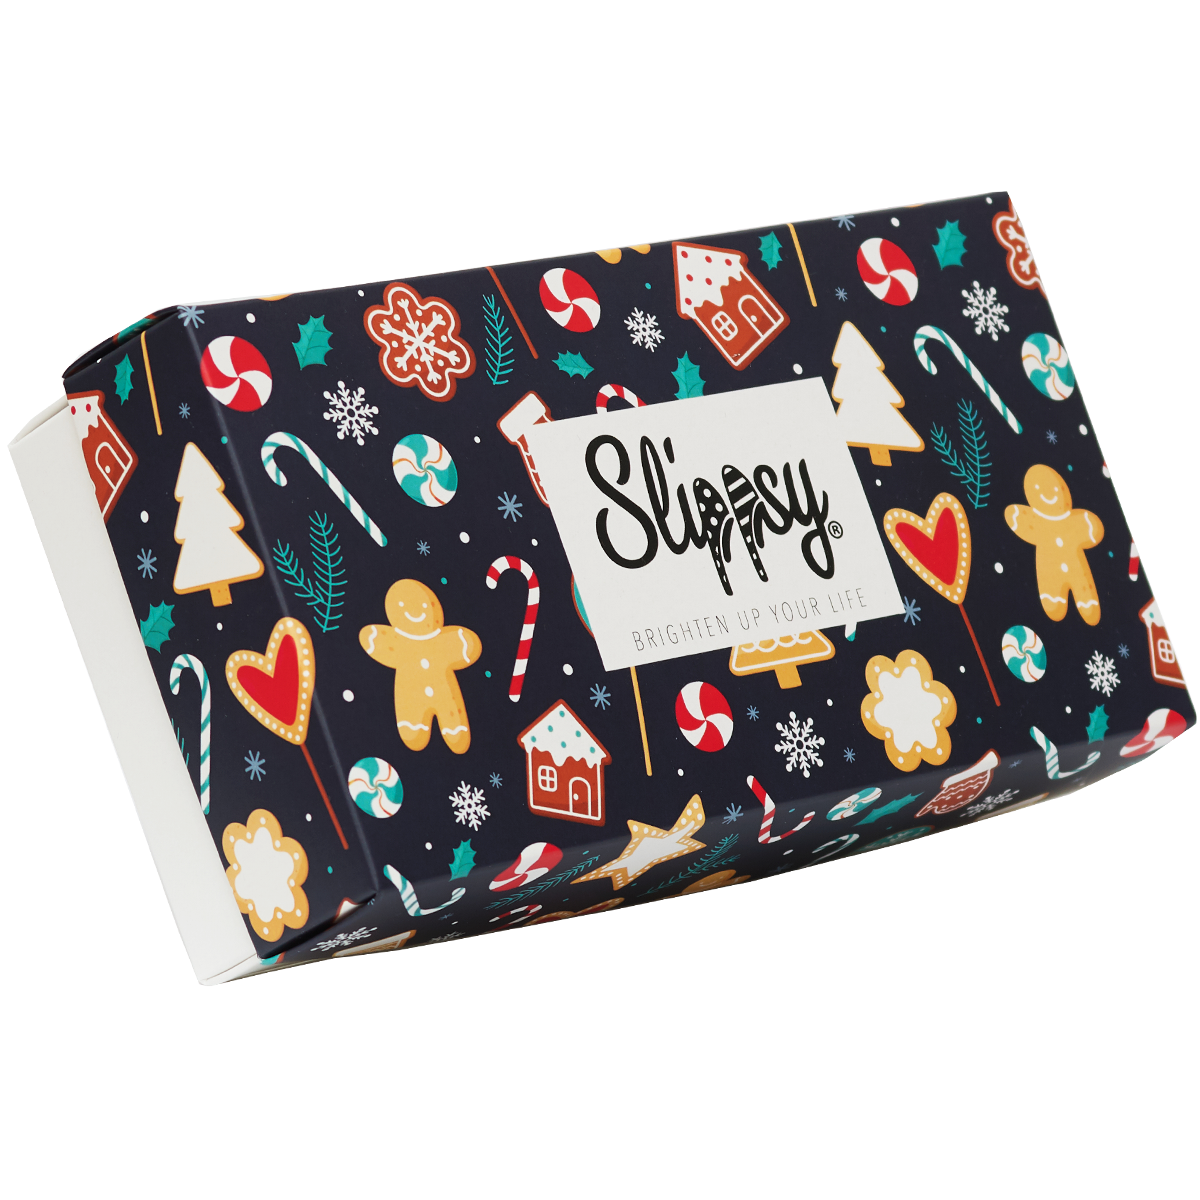 E-shop Slippsy Gingerbread box set